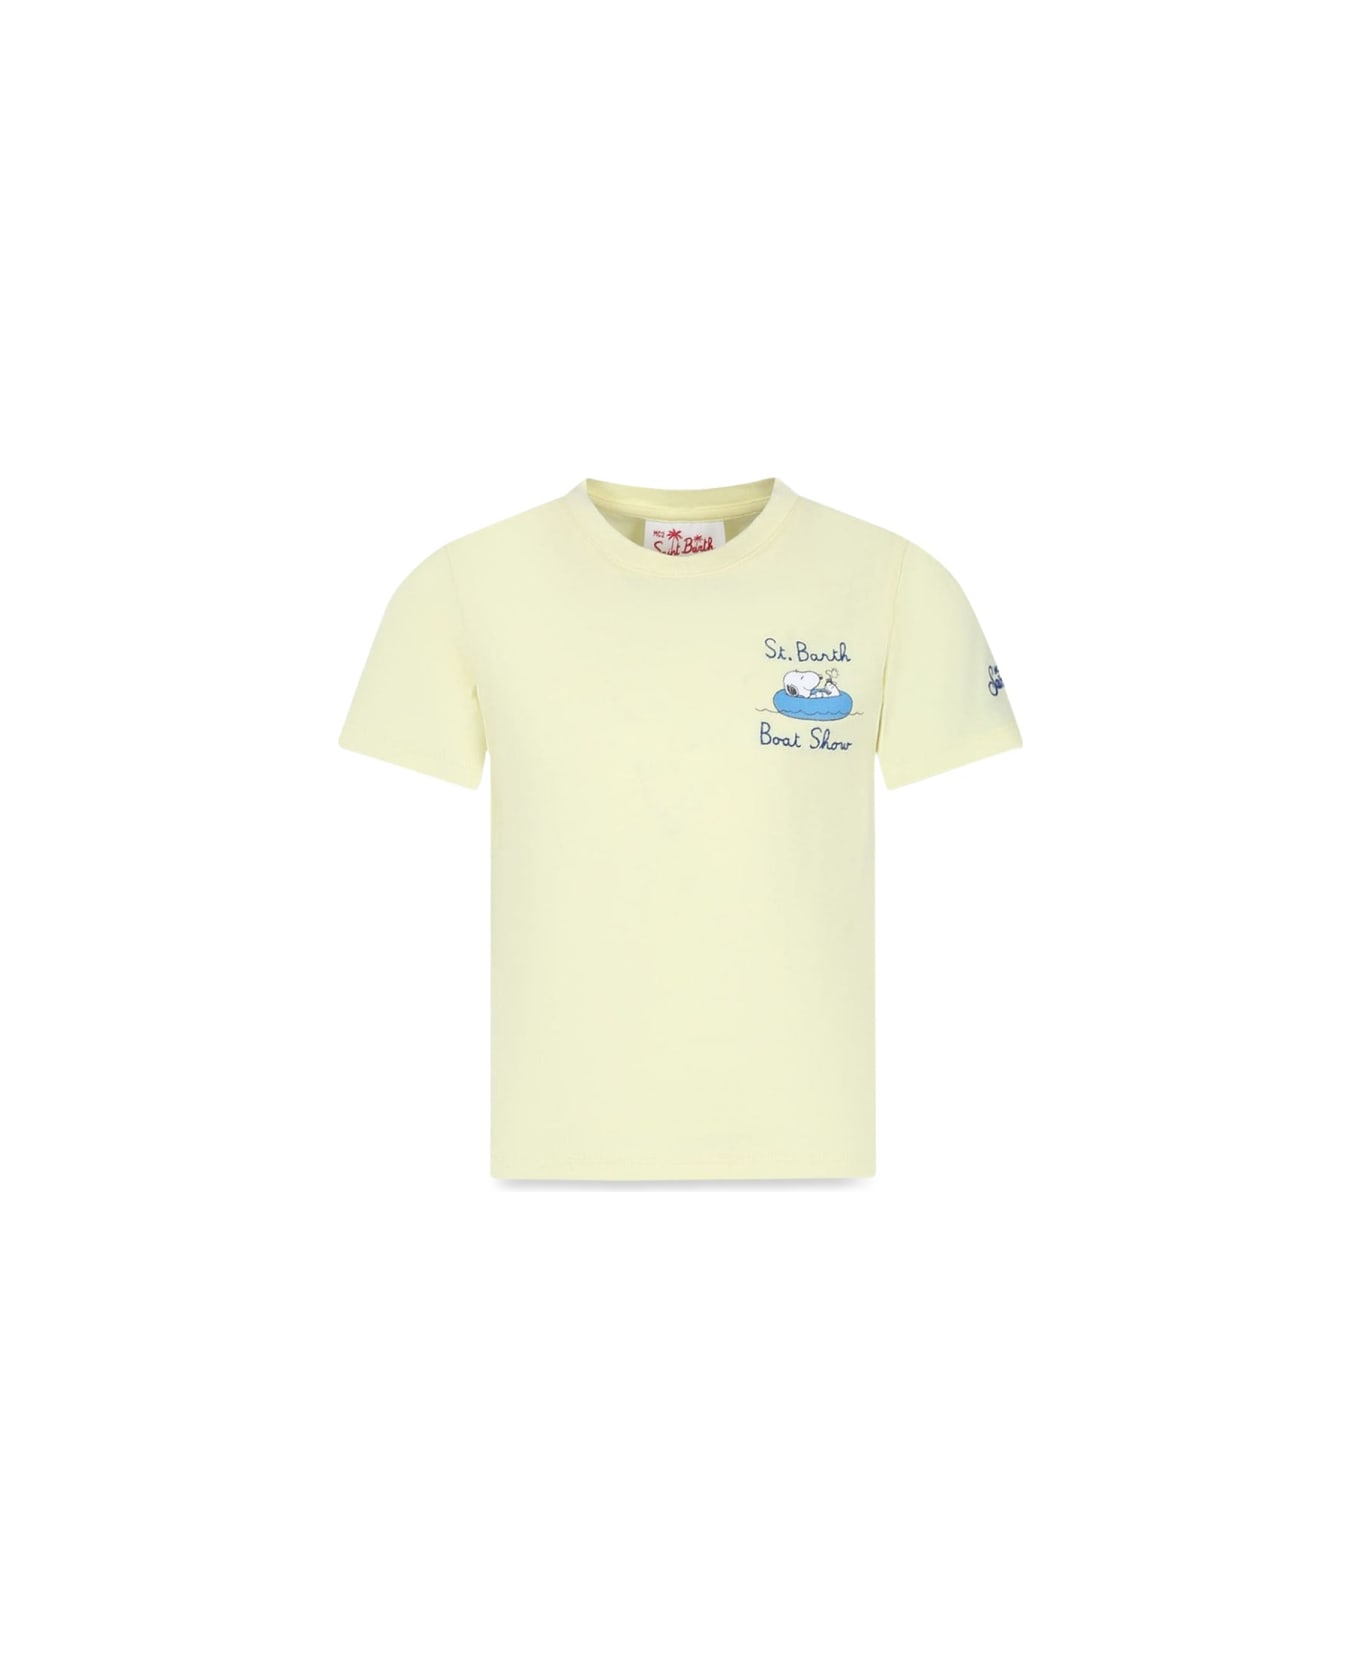 MC2 Saint Barth Tshirt Boy - Snoopy Sb Boat 92 Emb - YELLOW